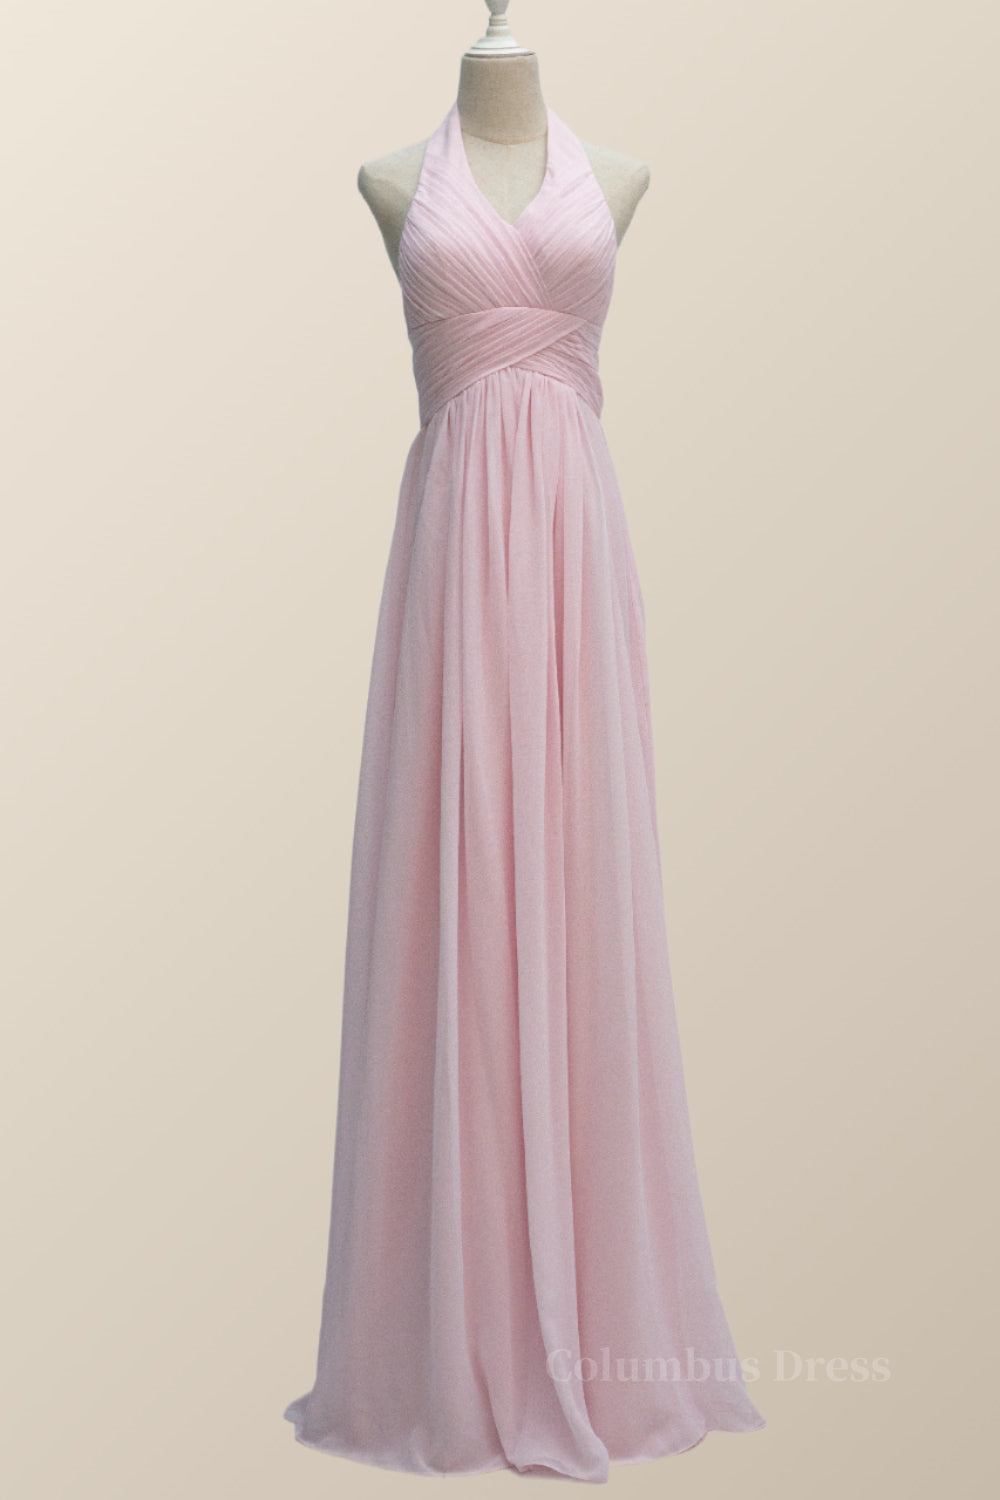 Halter Pink Chiffon A-line Long Corset Bridesmaid Dress outfit, Party Dress Couple